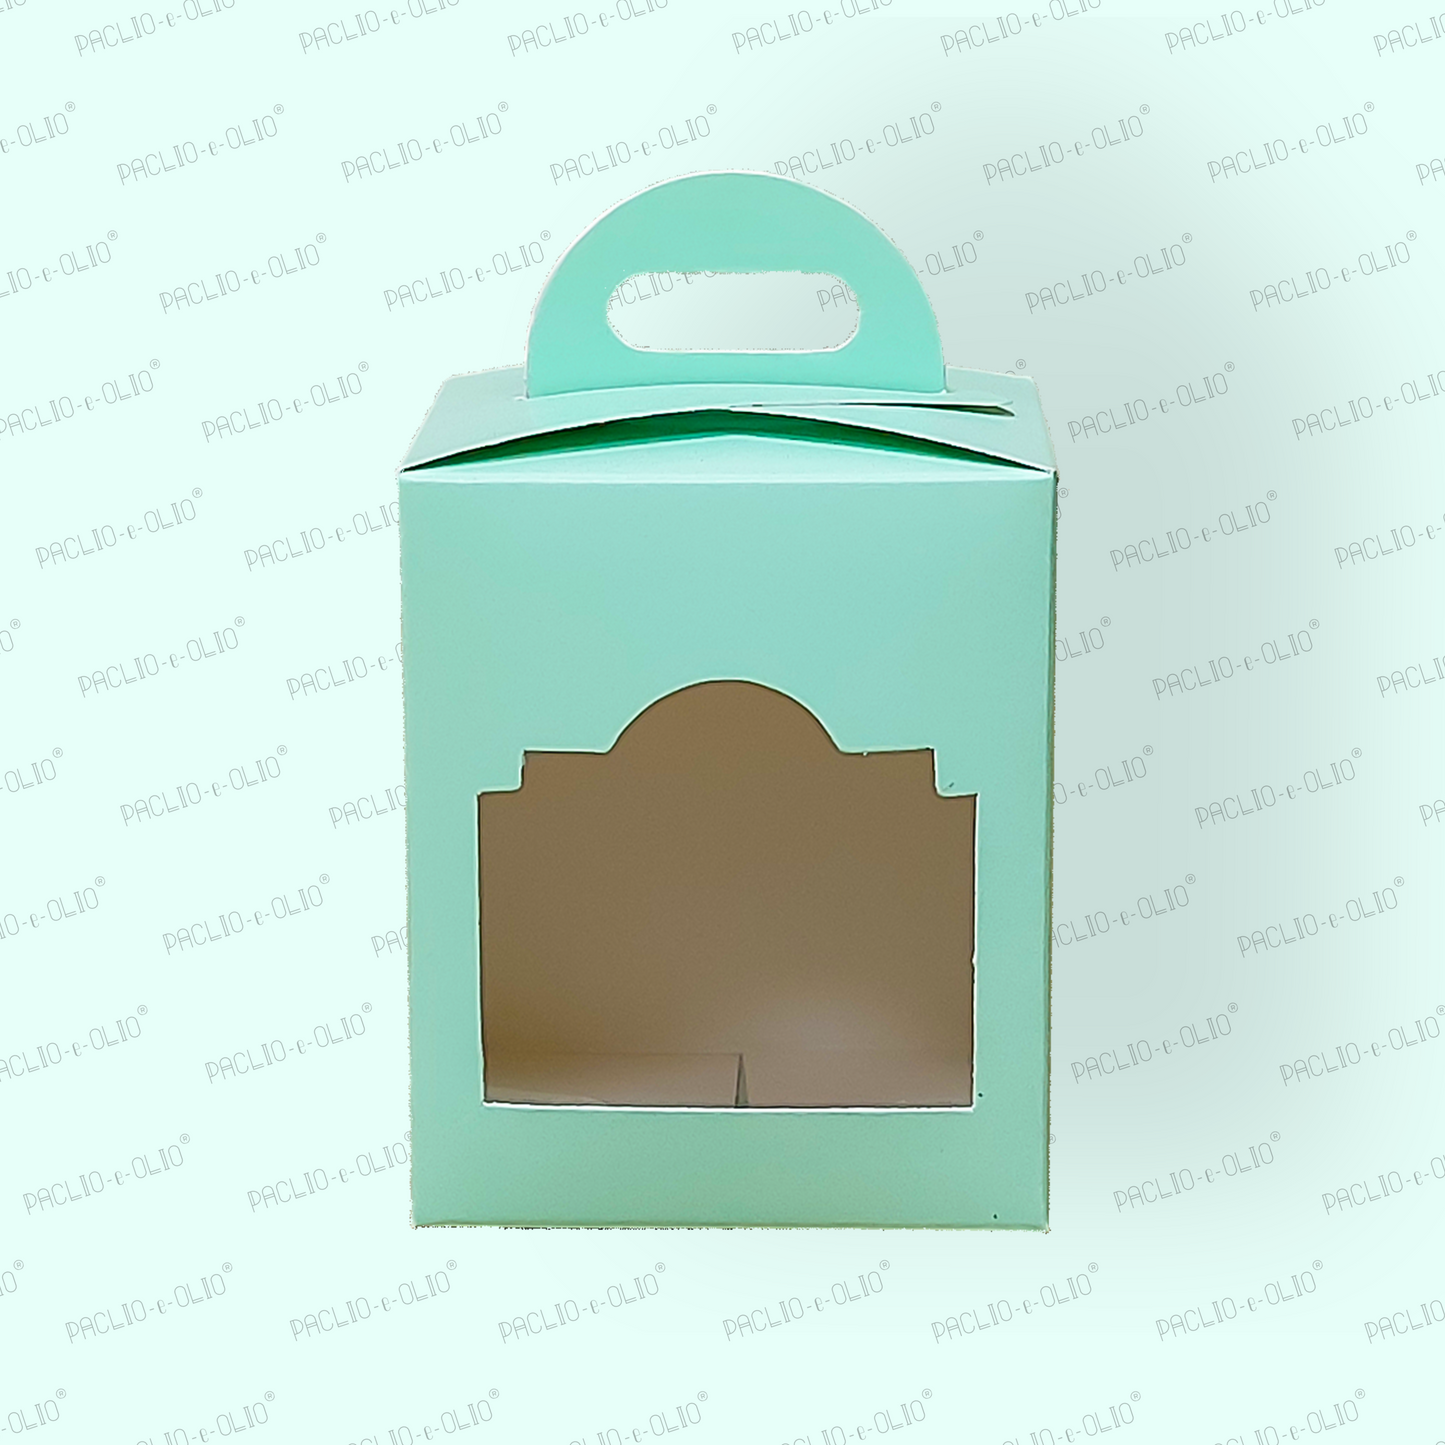 JAR BOX (3.5x3.5x4.5 INCHES)